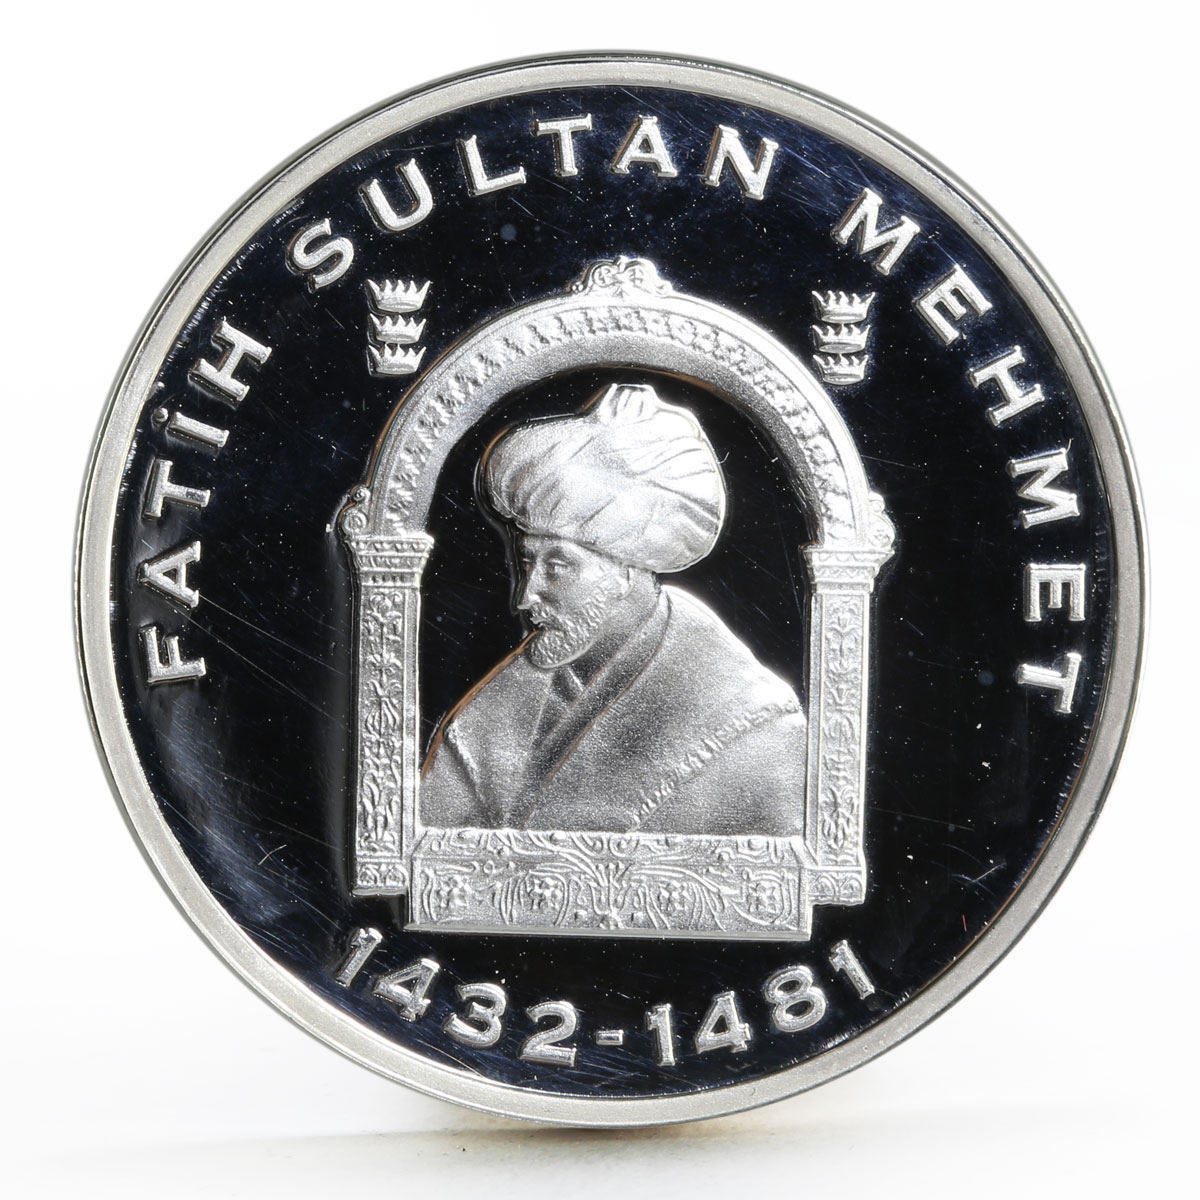 Turkey 15000000 lira 5th Sultan Mehmet II State Leader proof silver coin 2004